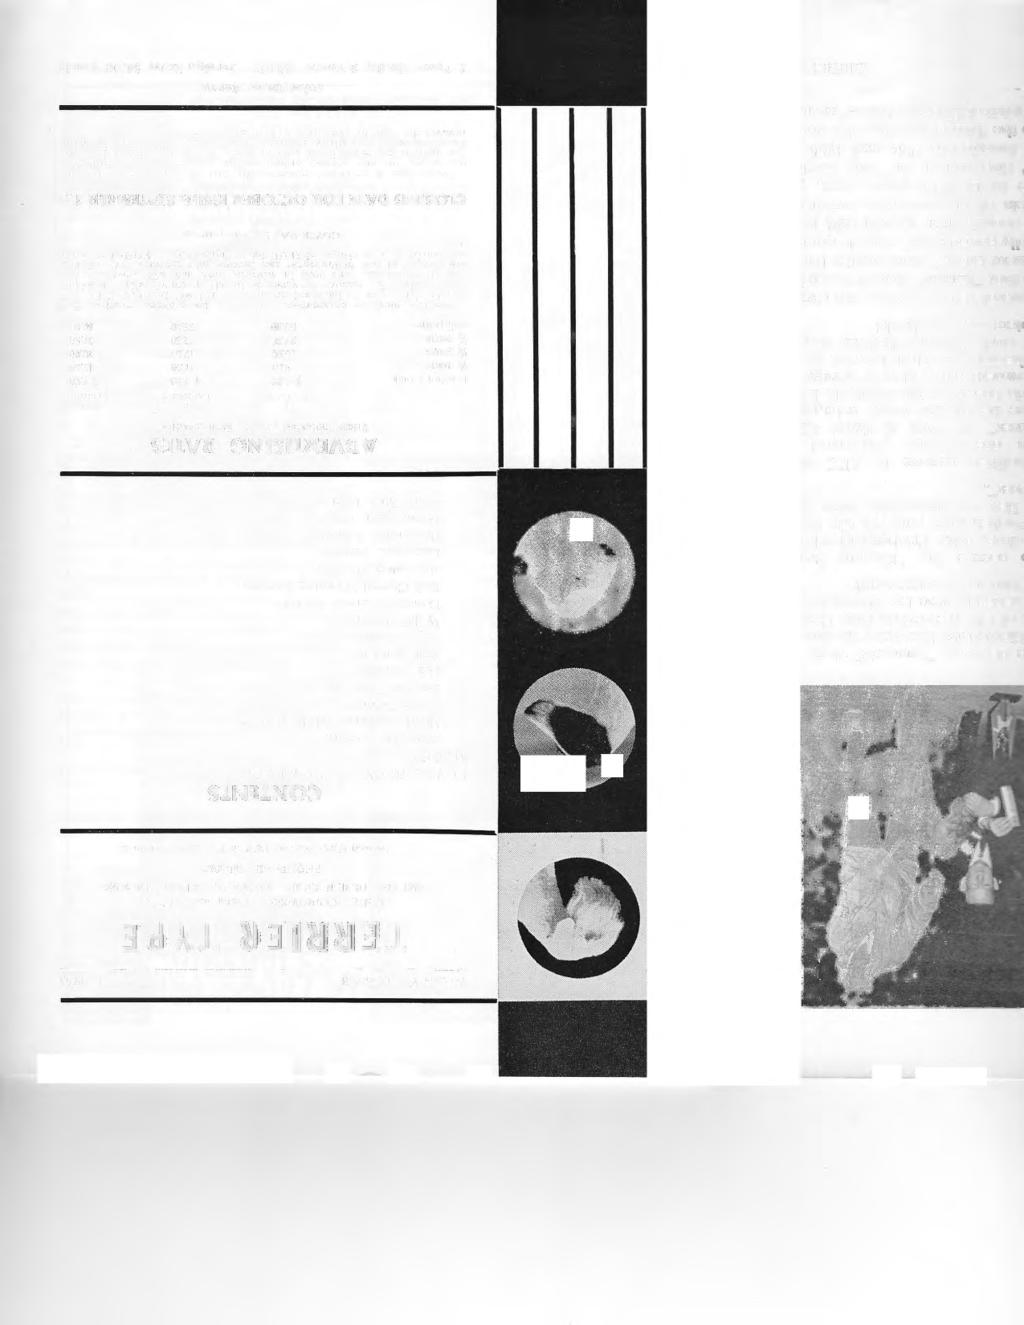 r- Volume V, Number 8 August, 1966 DANIEL KIEDROWSKI - Editor and Publisher 4961 OLD DUBLIN ROAD, HAYWARD, CALIFORNIA 94546 PHONE: 415-581-6062 Second Class Postage Paid at Hayward, California